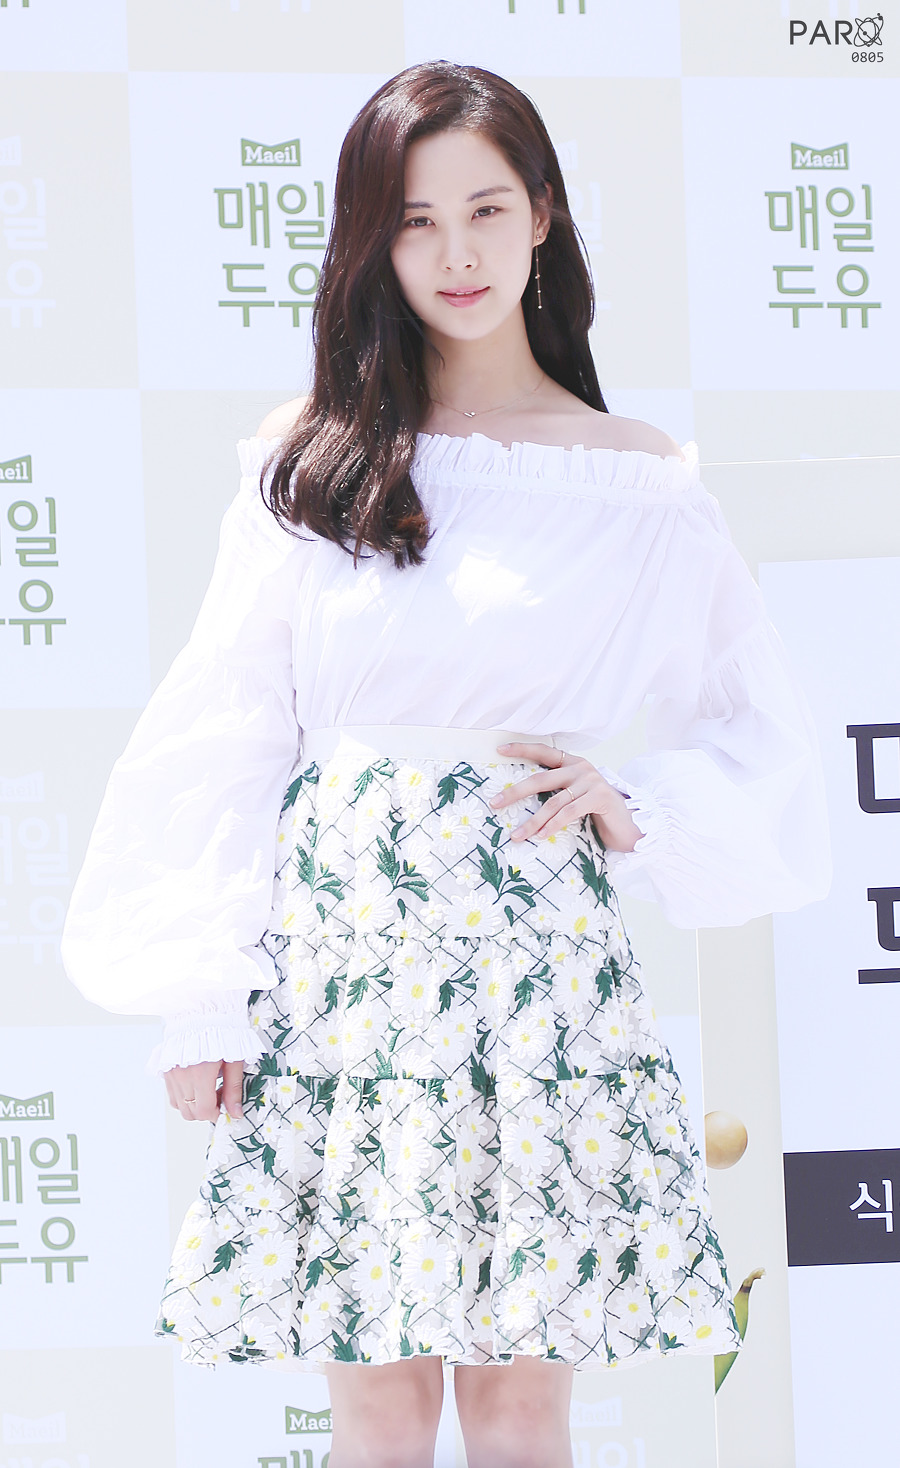  [PIC][03-06-2017]SeoHyun tham dự sự kiện “City Forestival - Maeil Duyou 'Confidence Diary'” vào chiều nay - Page 3 2138423B593E47BF17307F